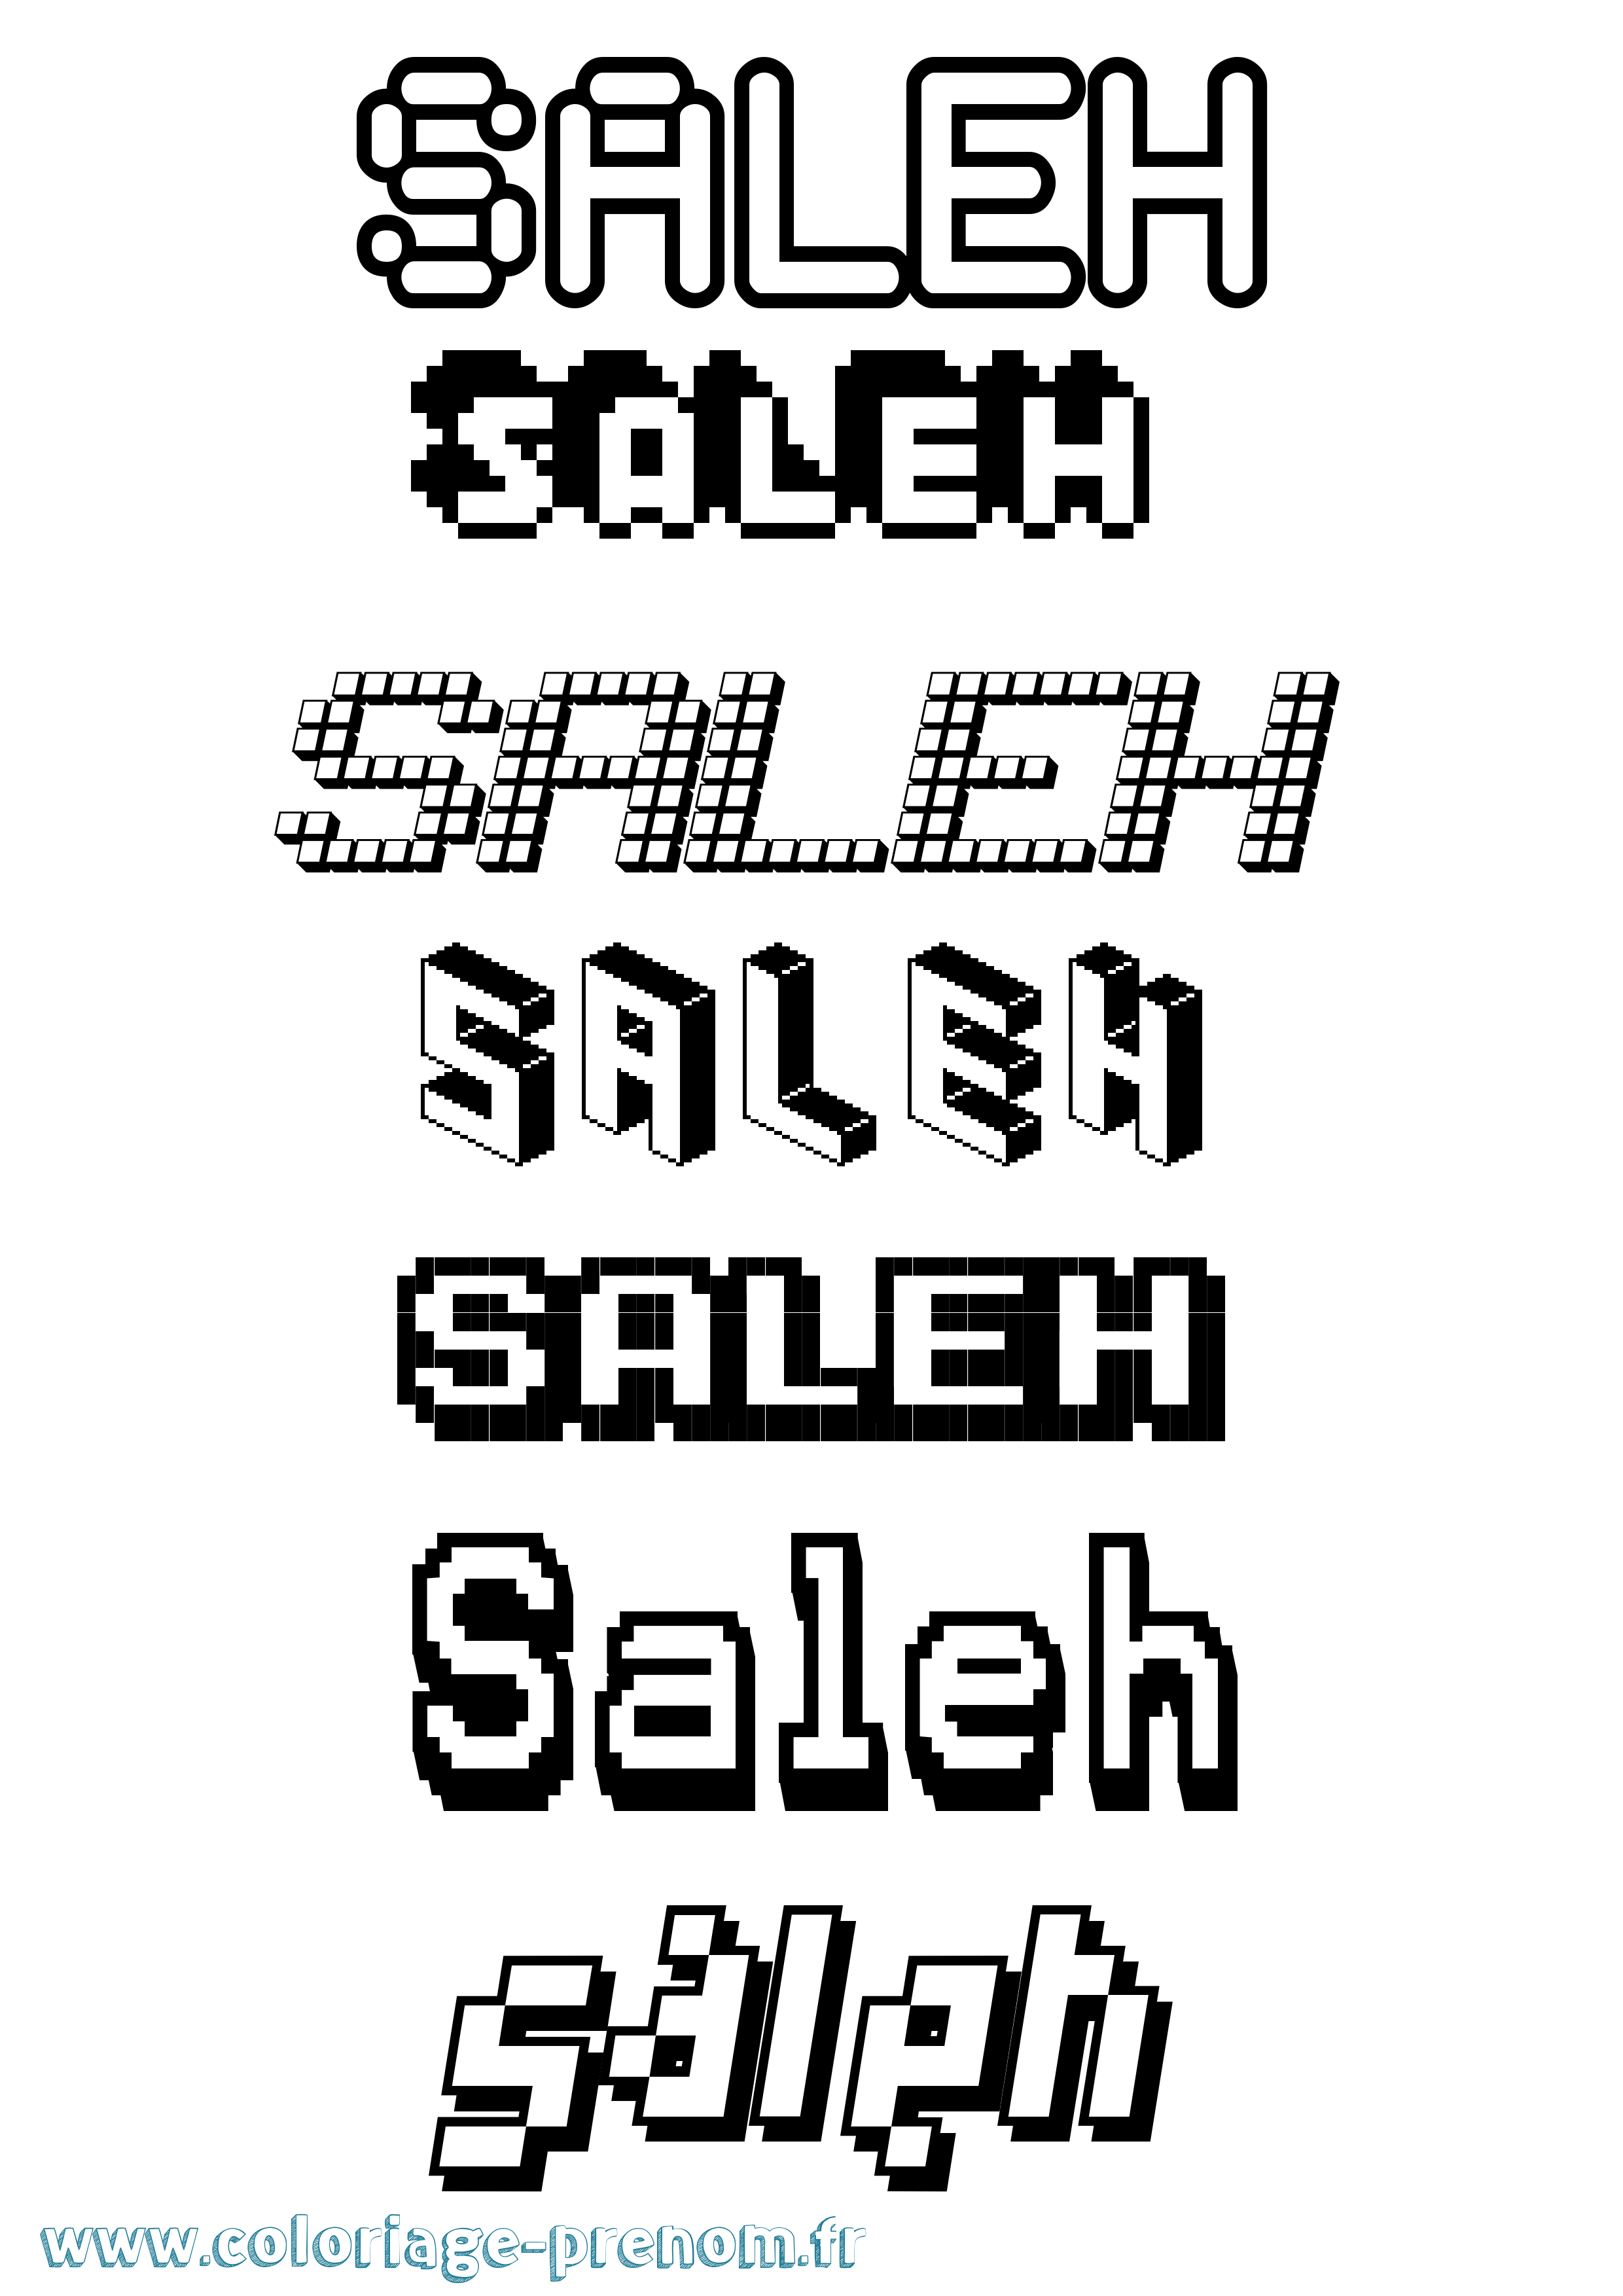 Coloriage prénom Saleh Pixel